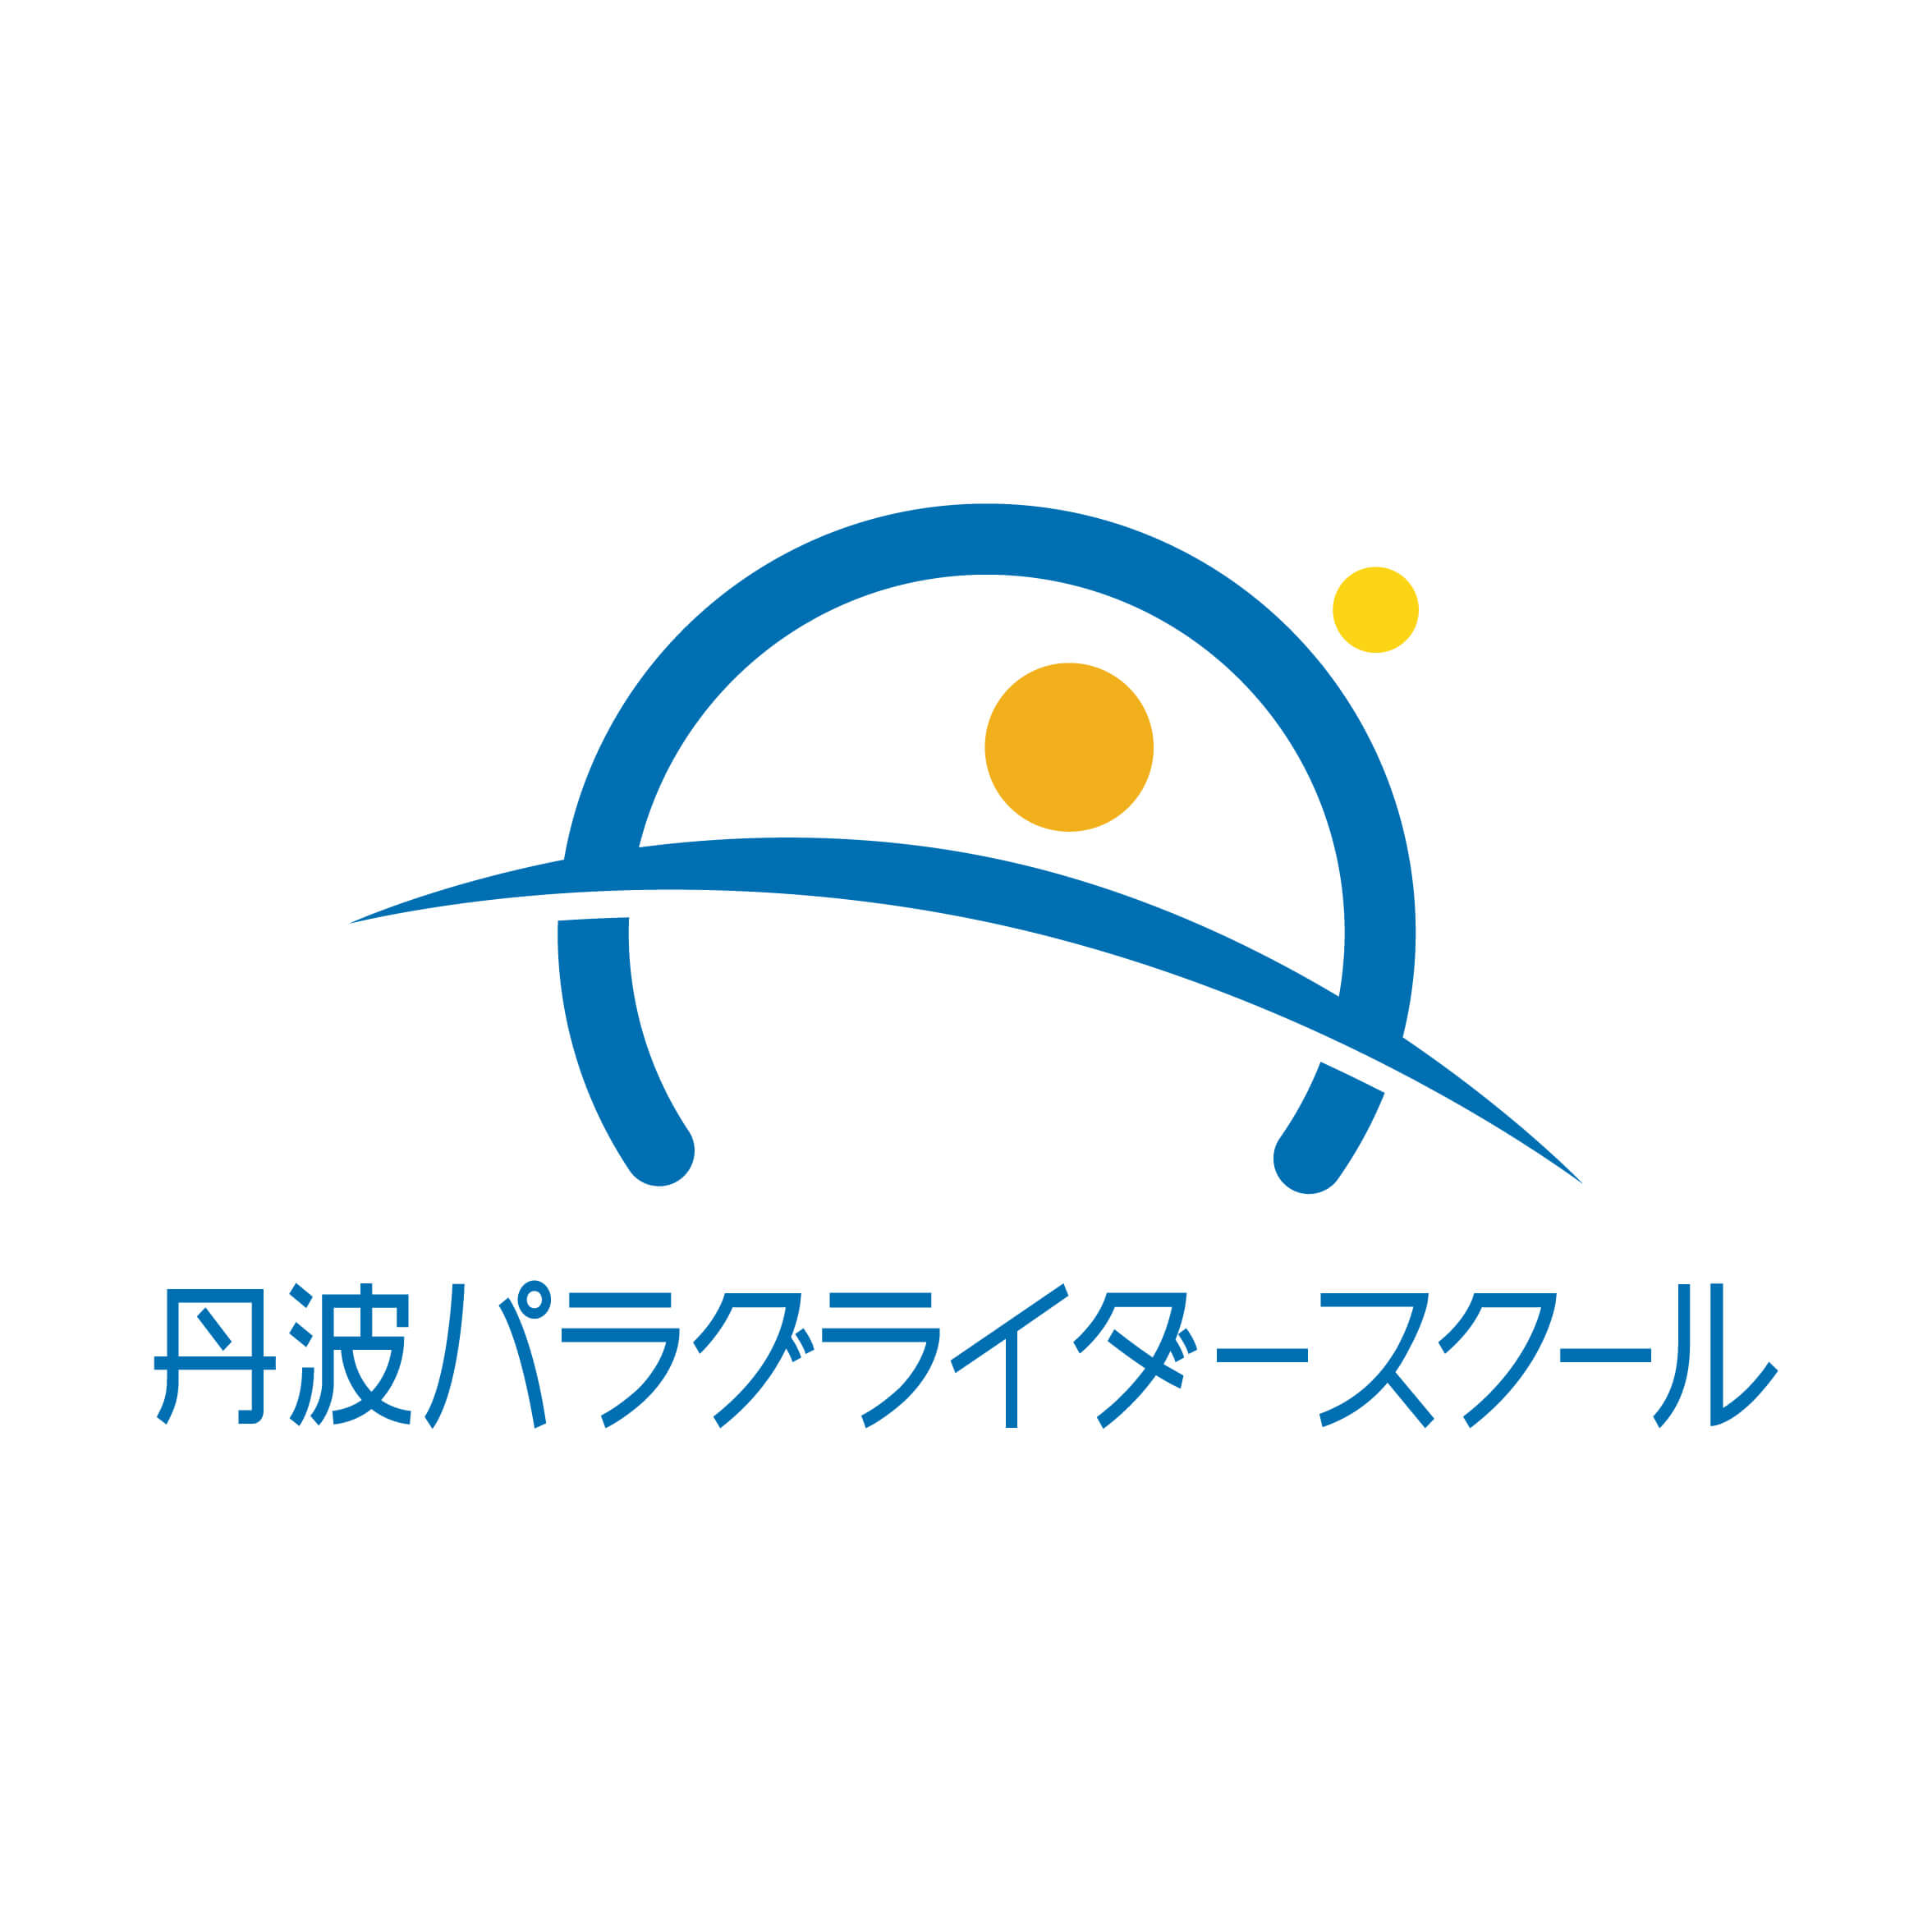 logo tate japanese white back